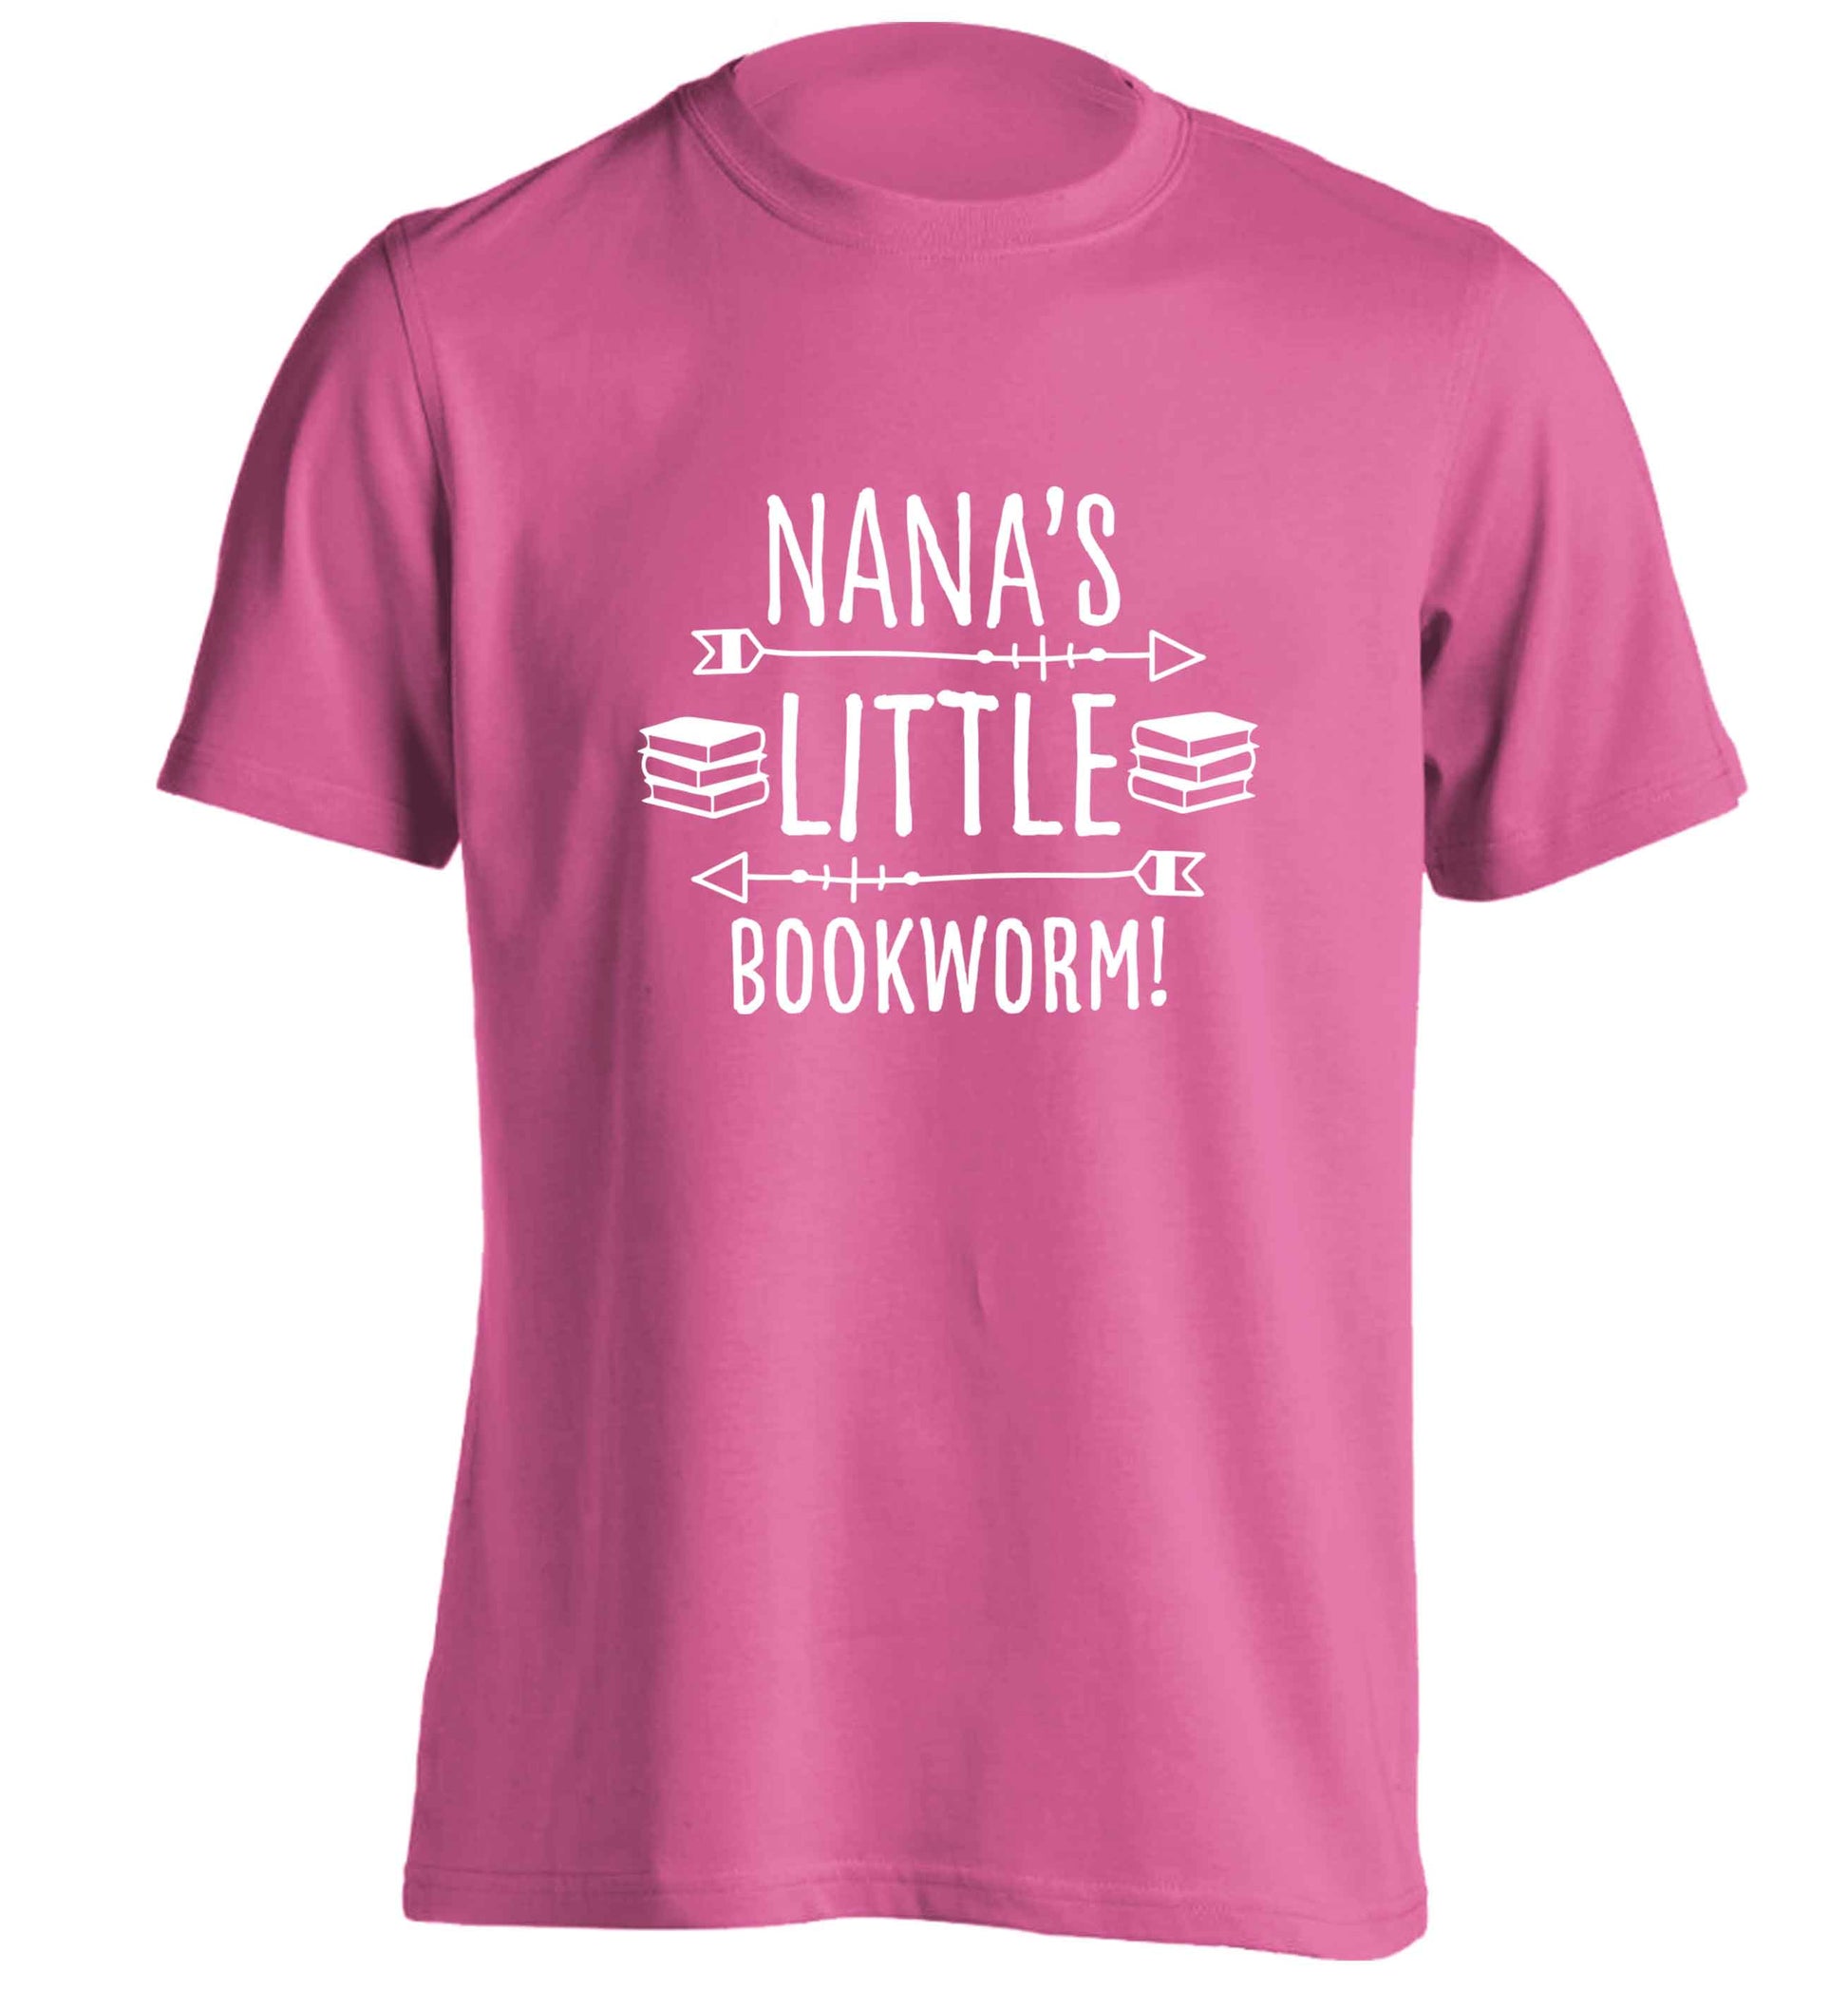 Nana's little bookworm adults unisex pink Tshirt 2XL